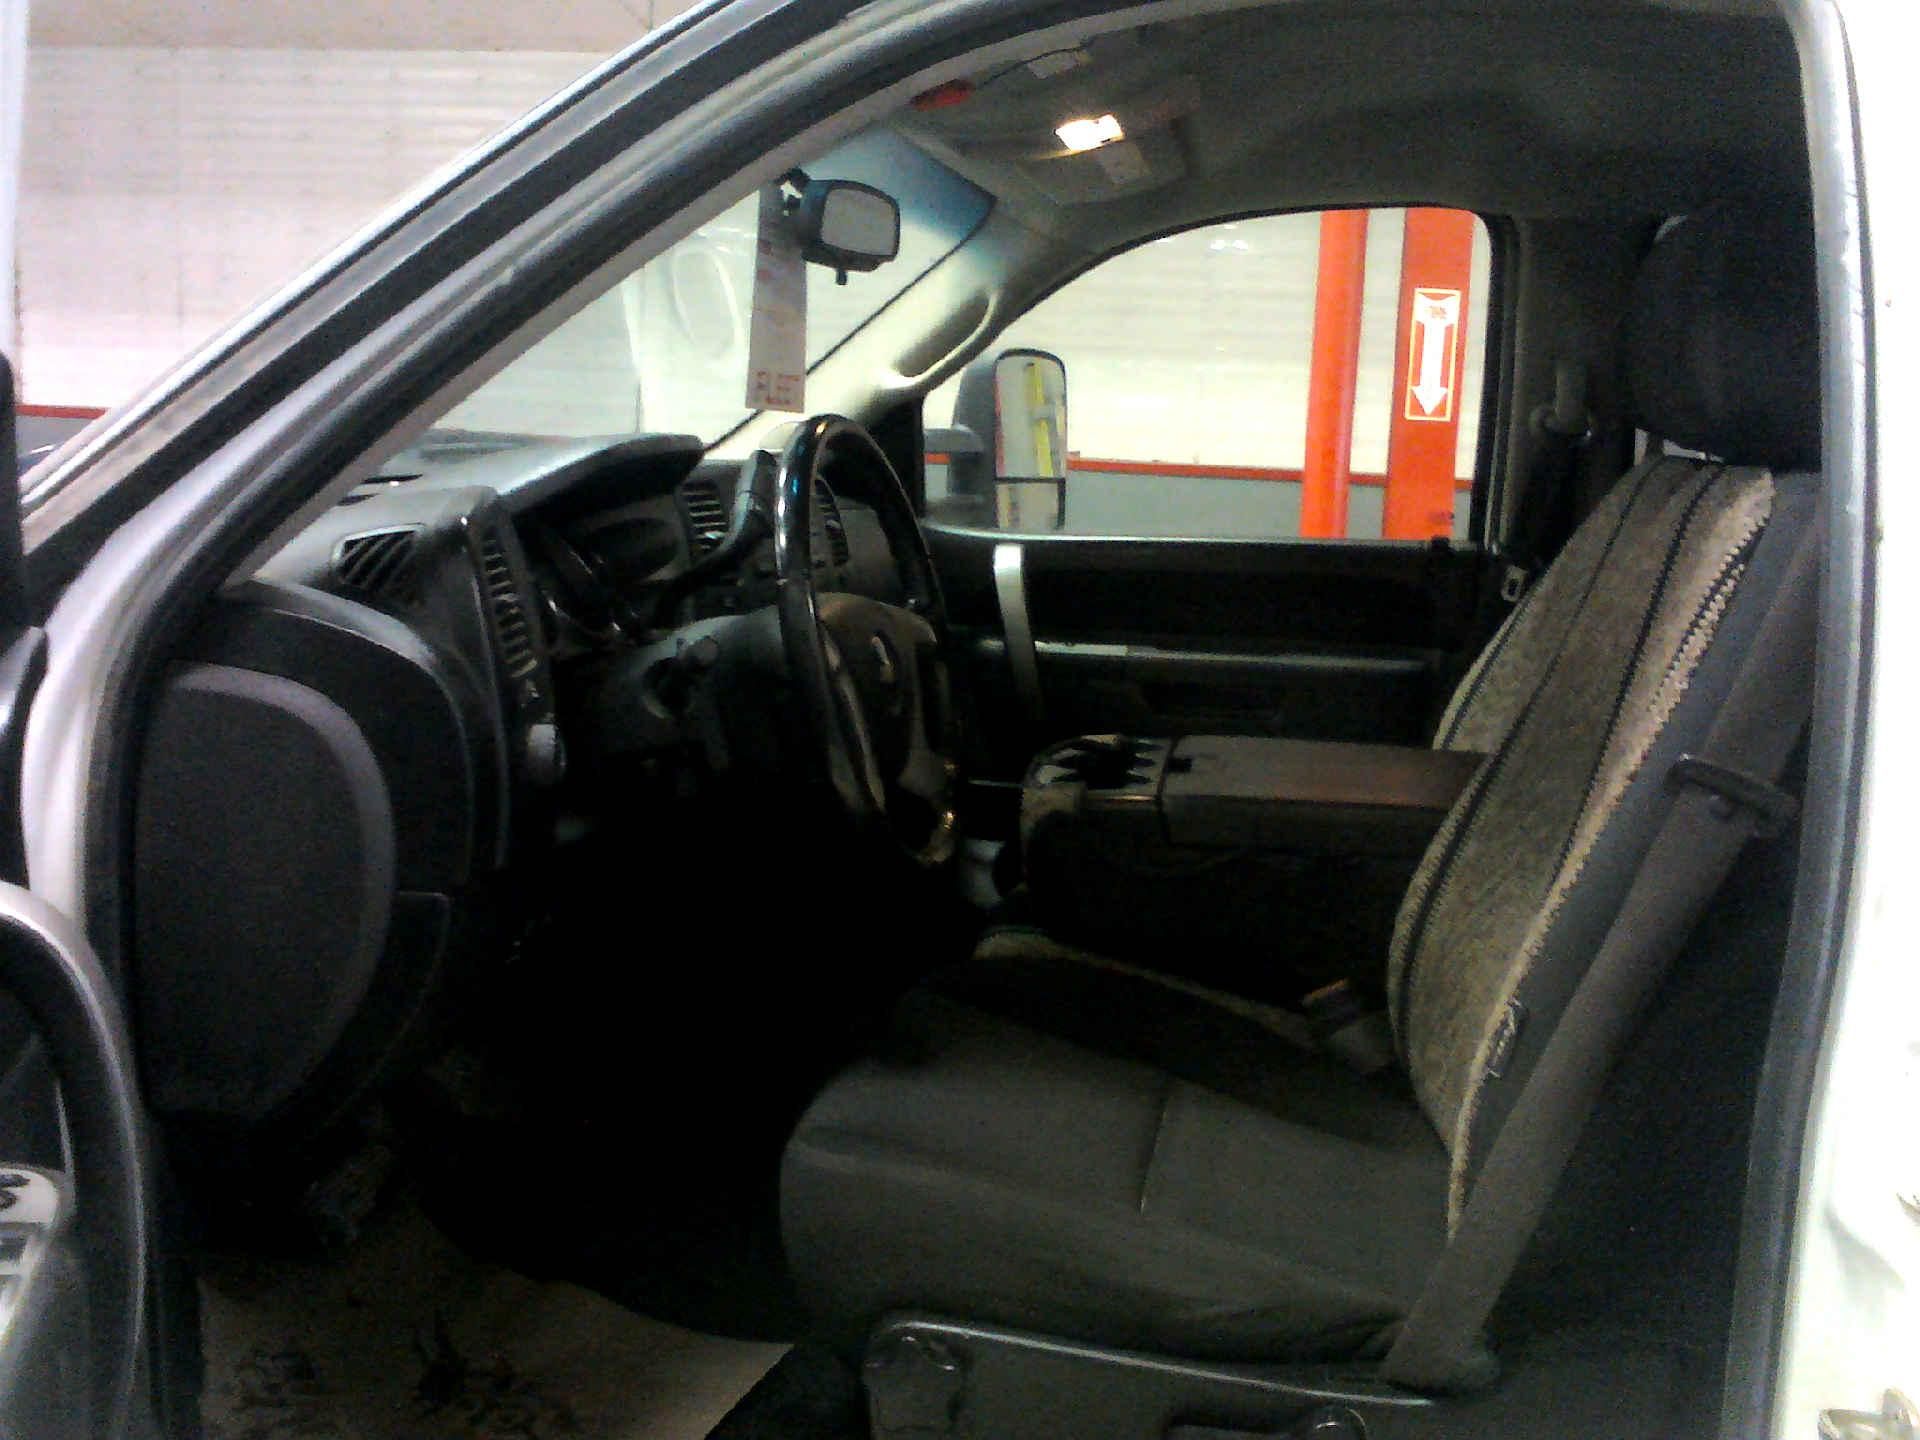 2011 CHEVROLET SILVERADO 2500HD LT CREW CAB 4WD 6.6L V8 OHV 32V TURBO DIESEL AUTOMATIC SN: - Image 5 of 9